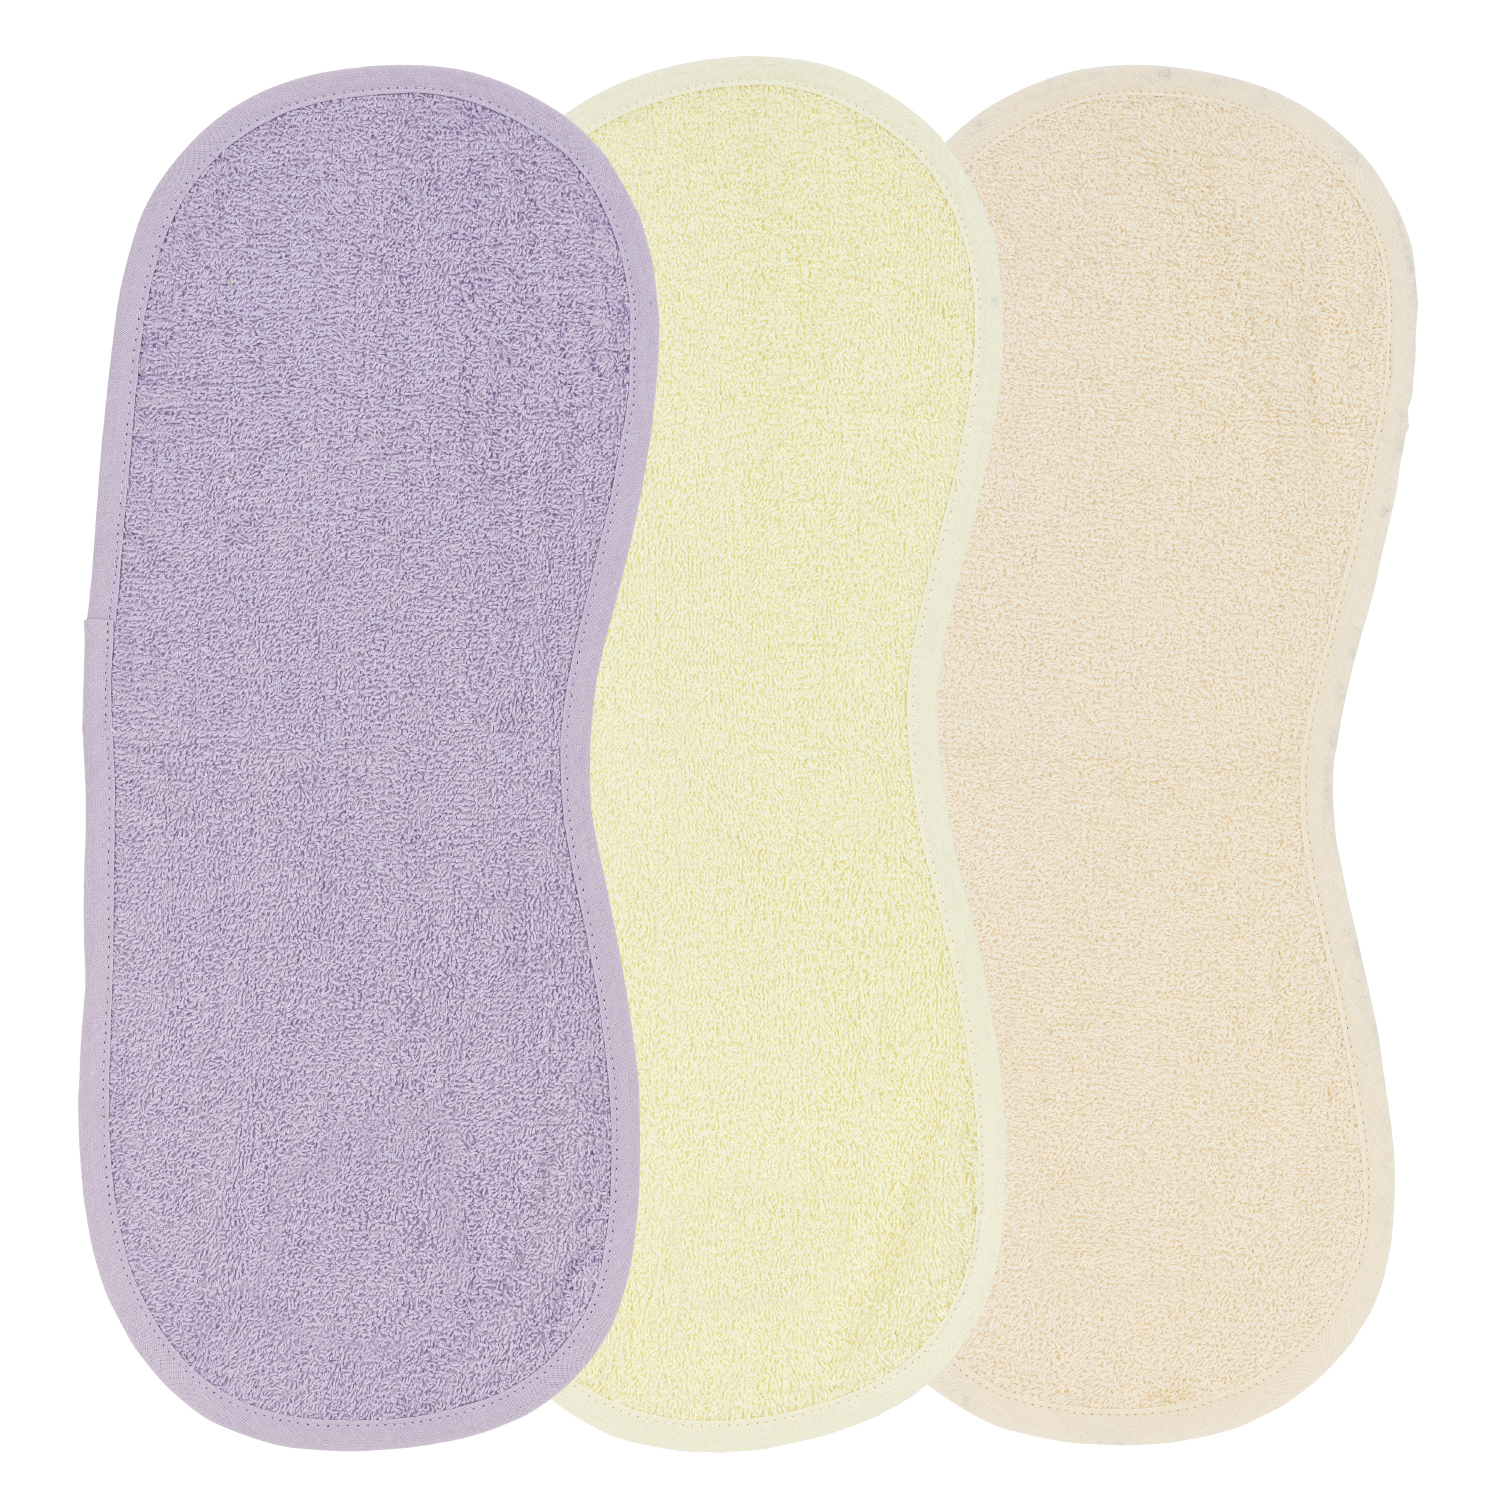 Basic Badstof Spuugdoeken Schoudermodel 3-pack  - Soft Lilac/Soft Yellow/Soft Peach - 53x20cm